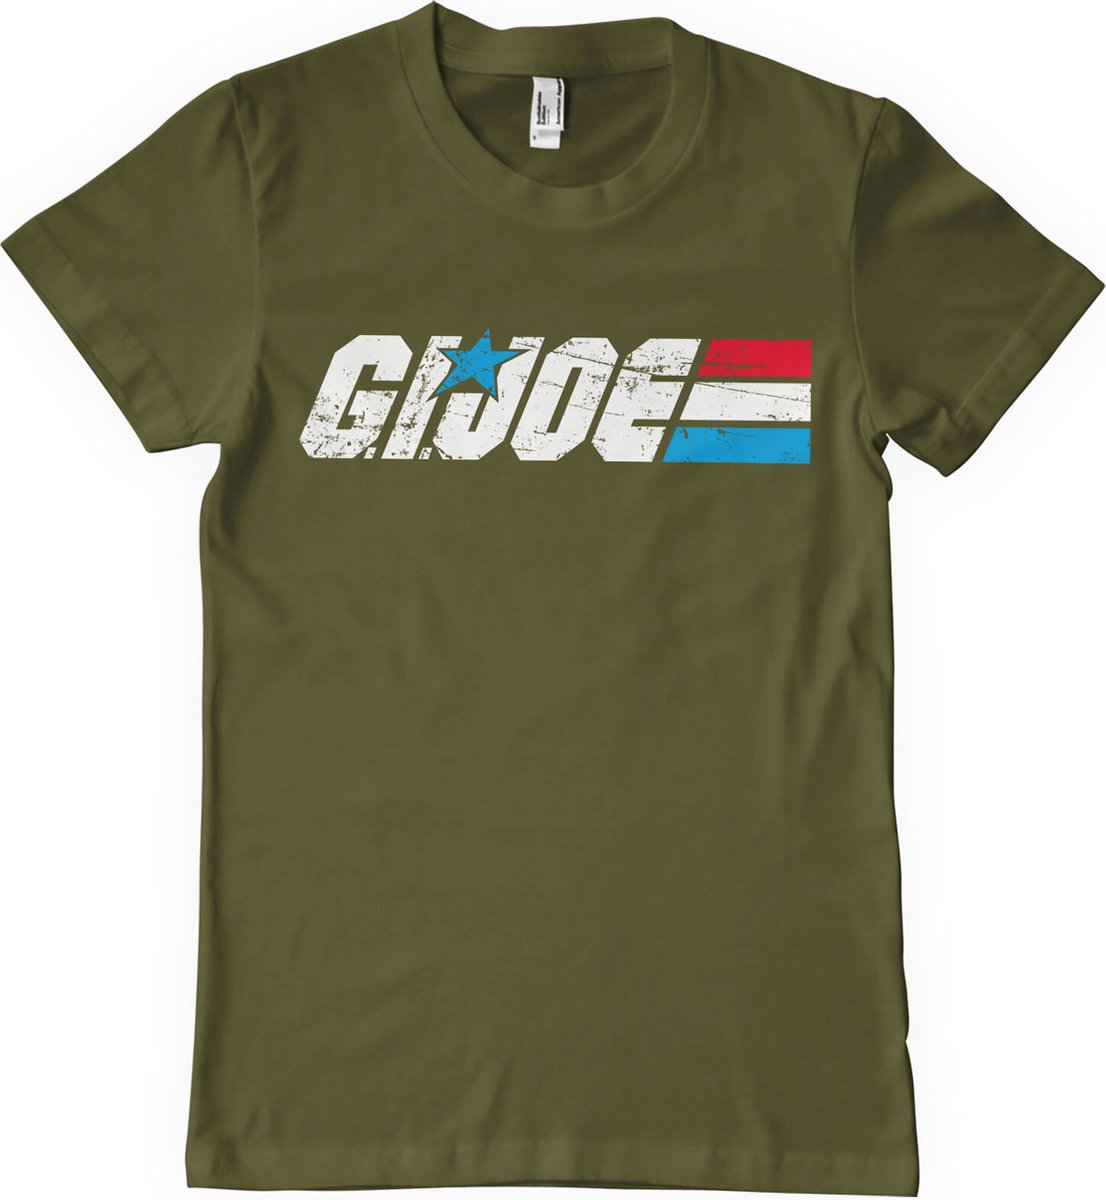 G.I. Joe shirt – Classic Logo maat L